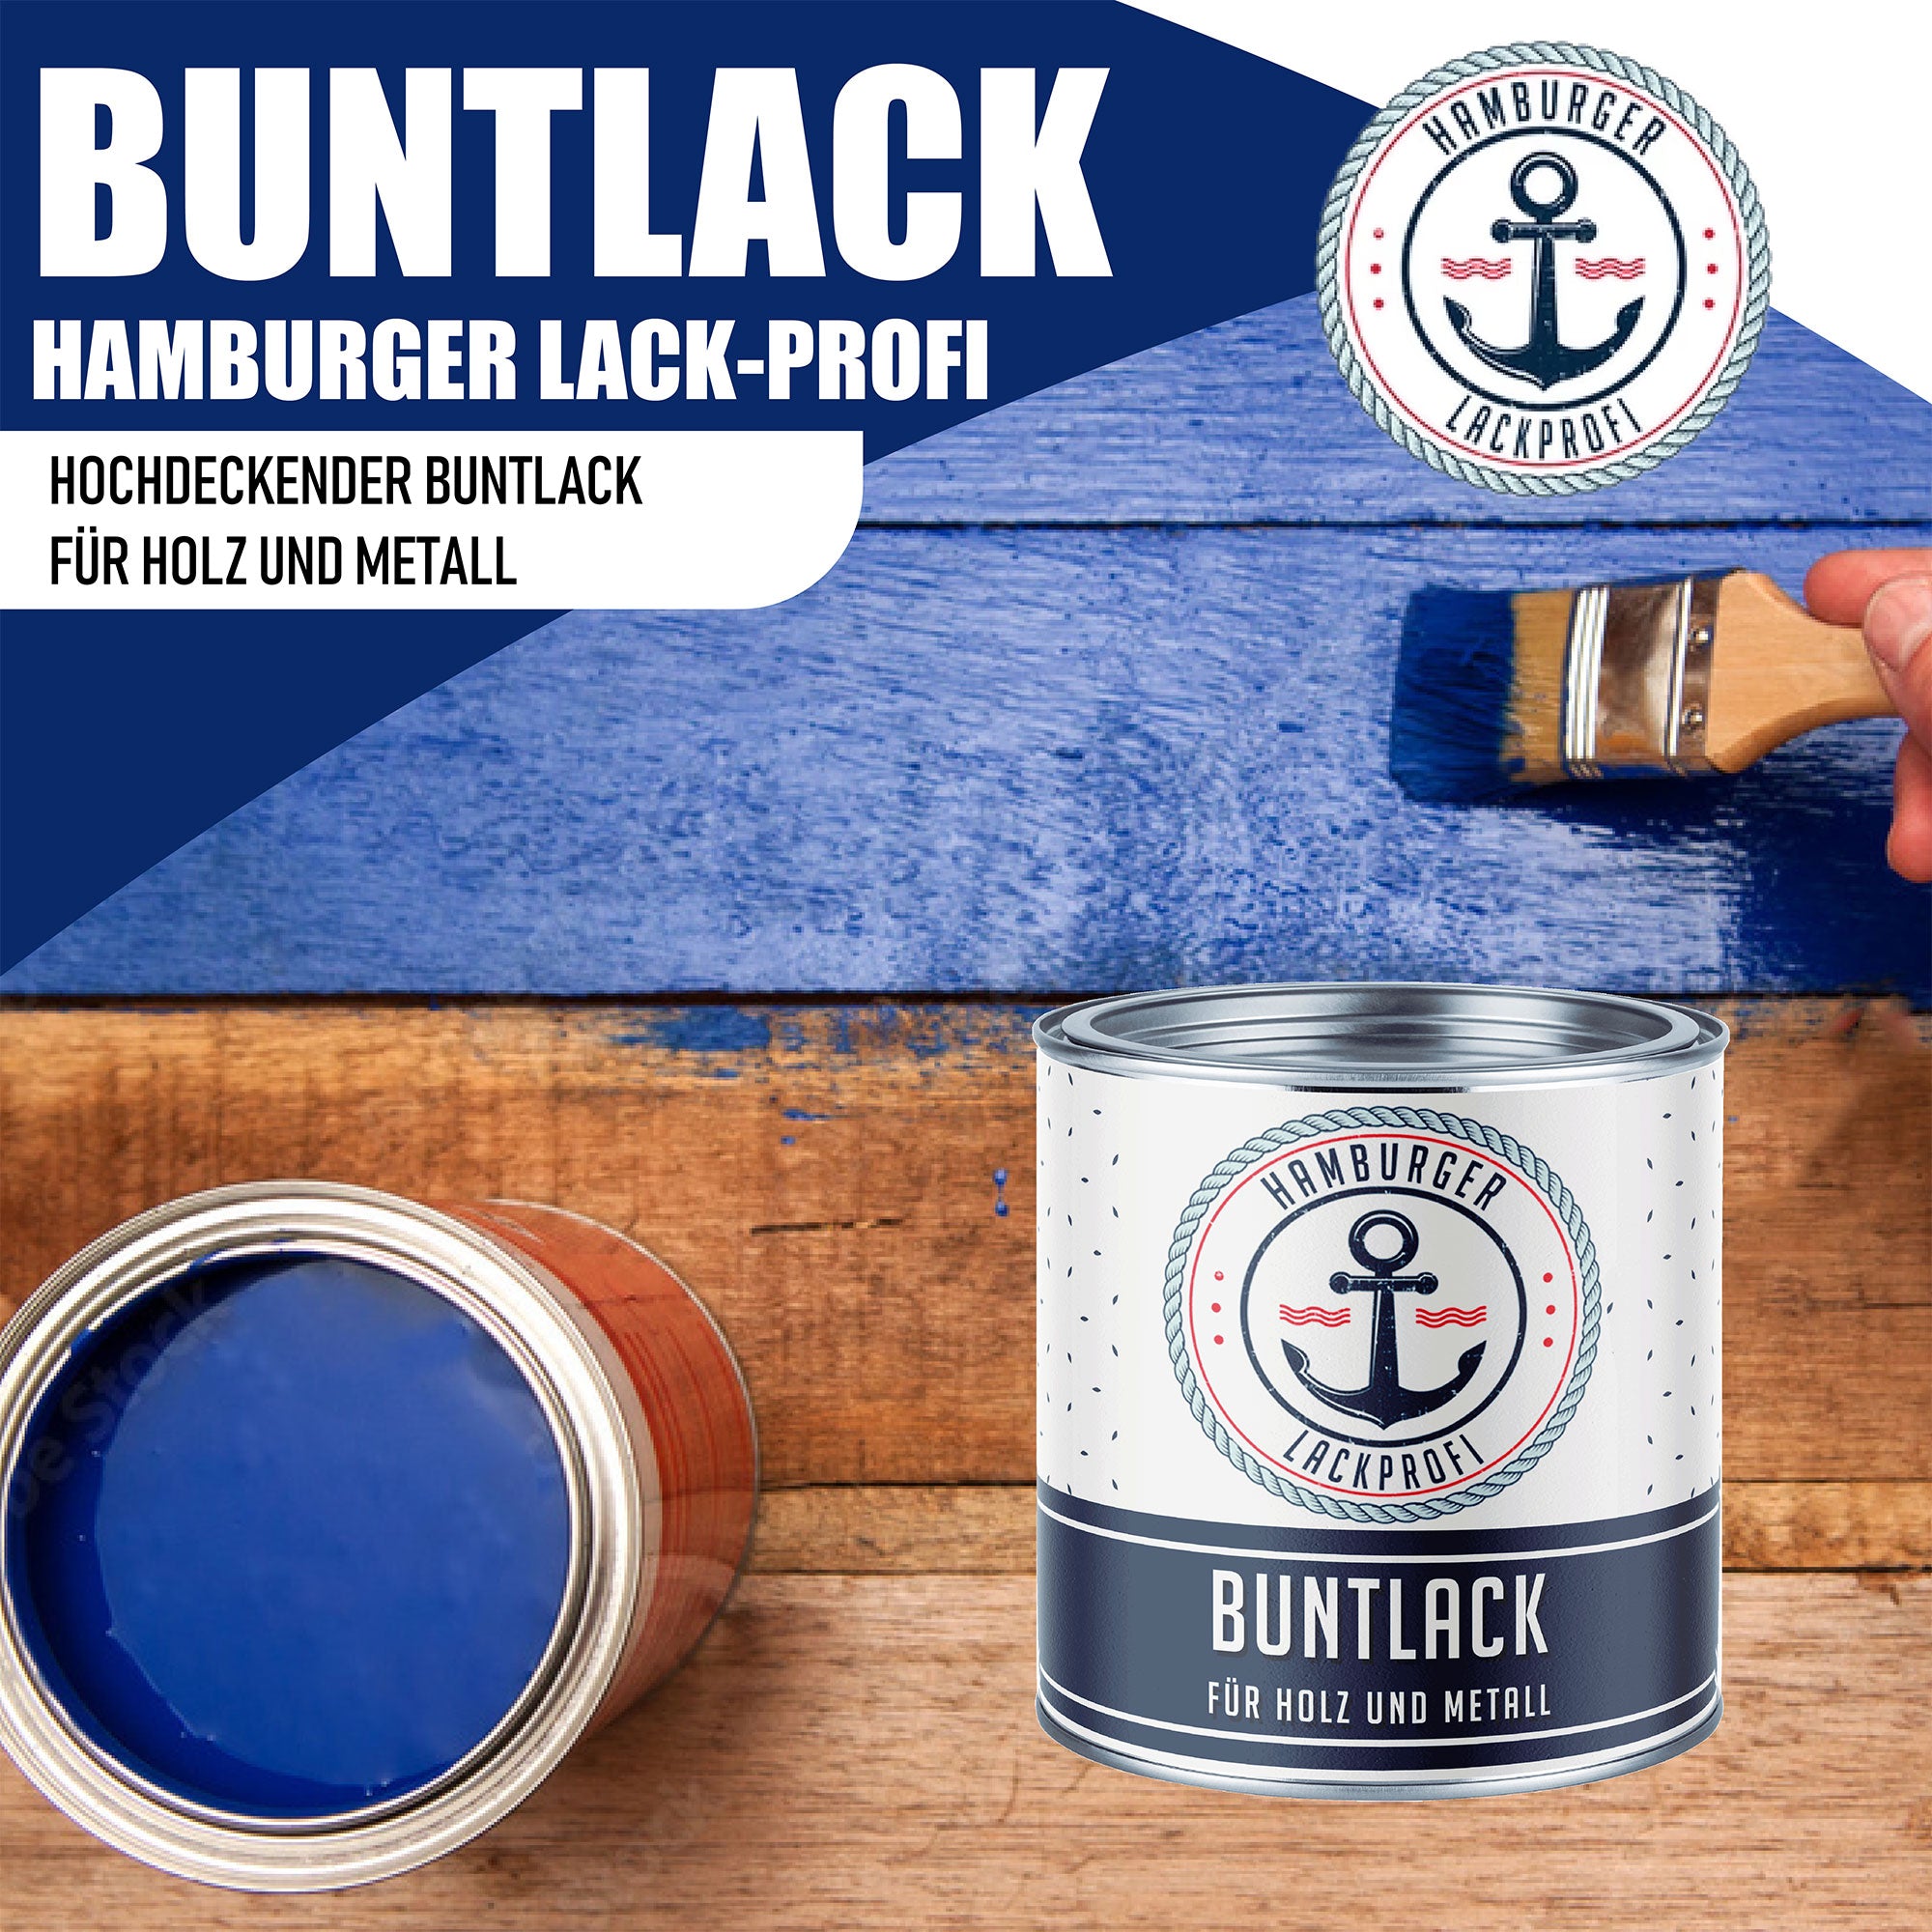 Hamburger Lack-Profi Buntlack Rehbraun RAL 8007 - Robuster Kunstharzlack